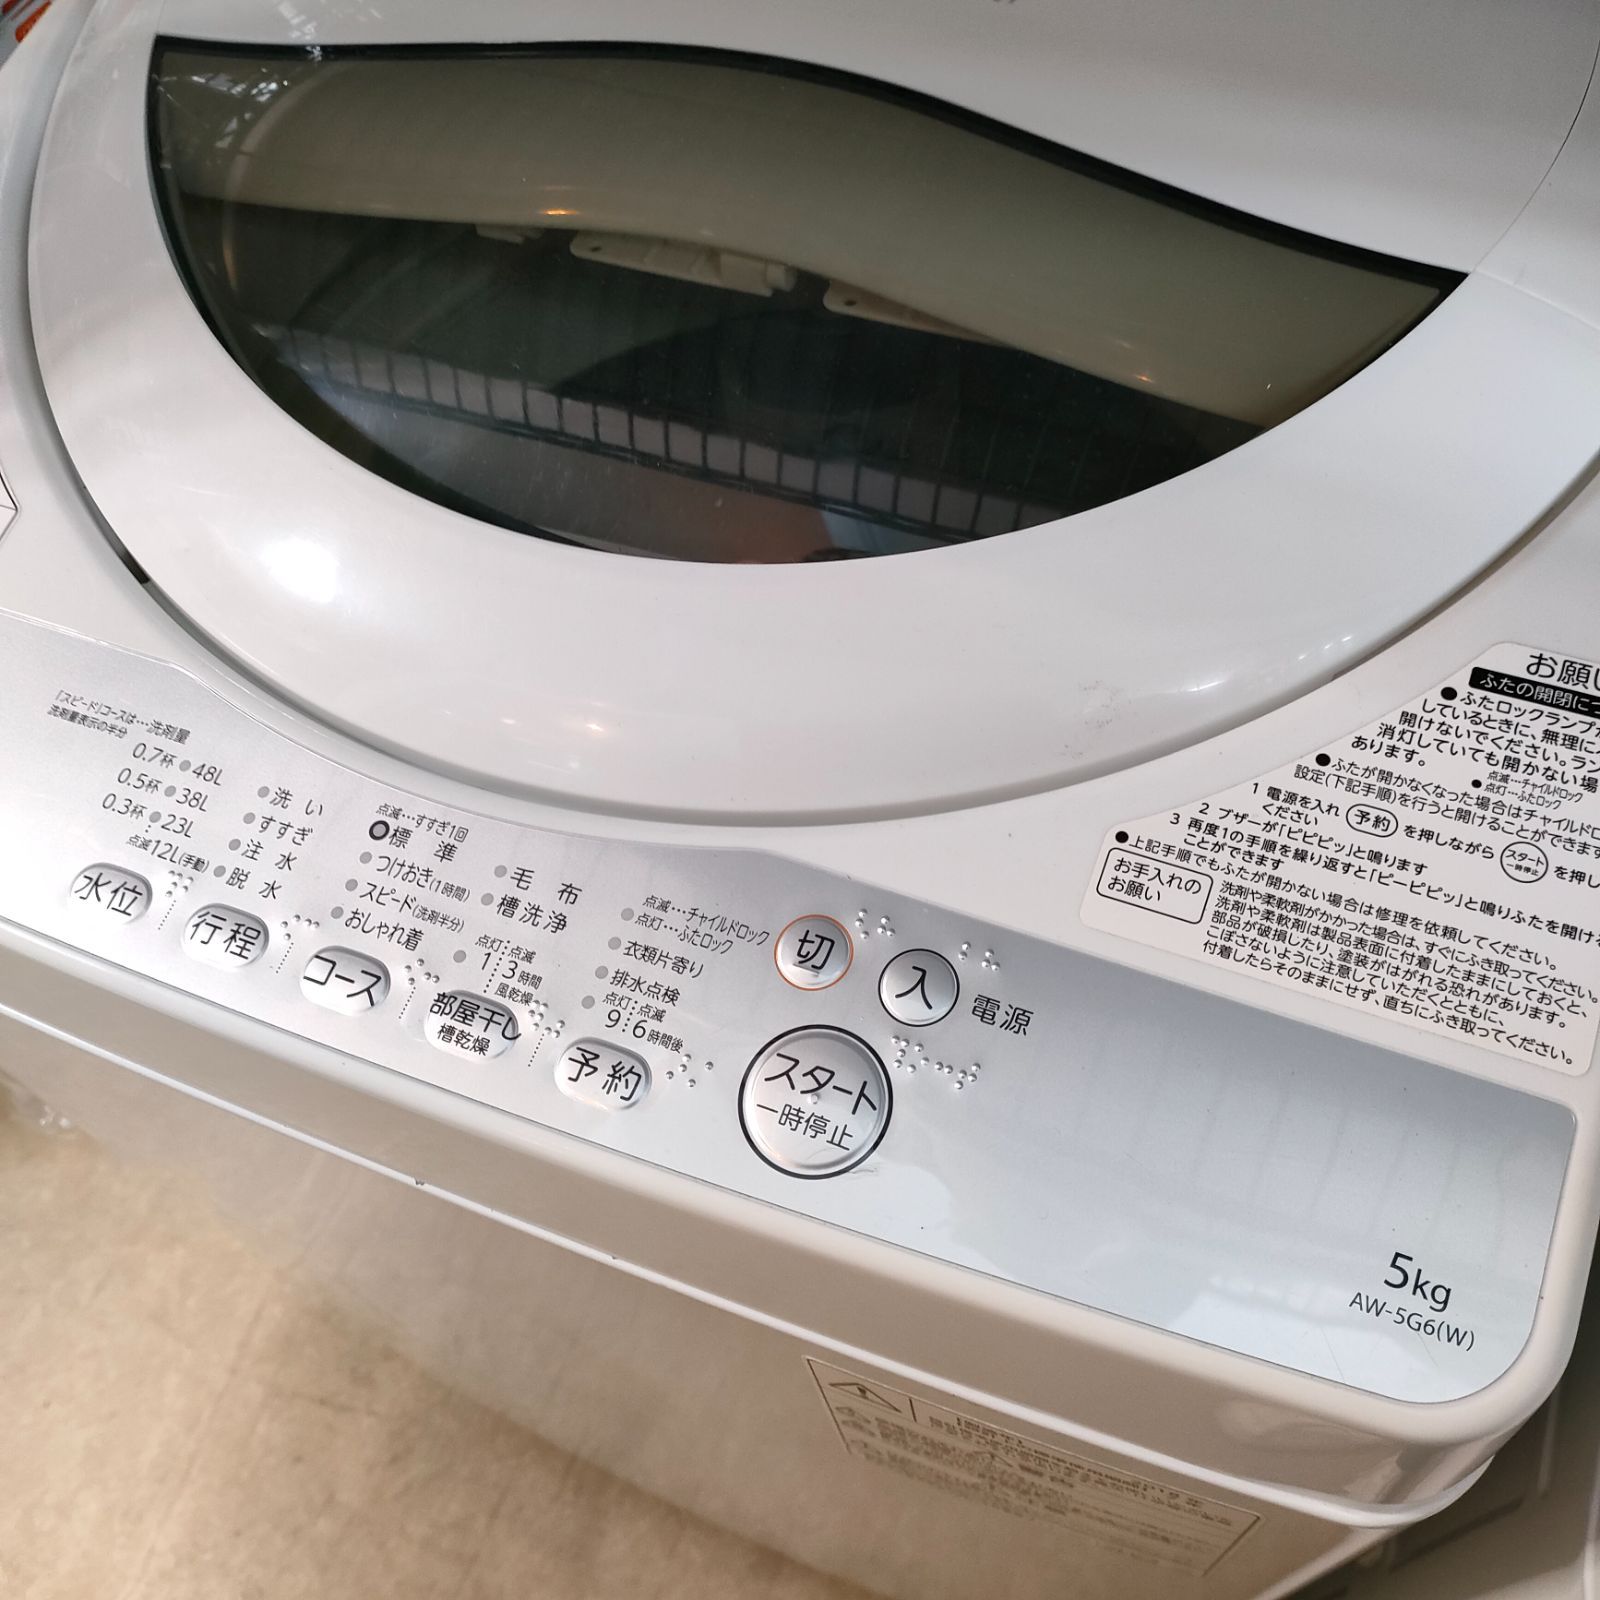 ◇TOSHIBA 洗濯機 単身用 5KG AW-5G6(W) - メルカリ